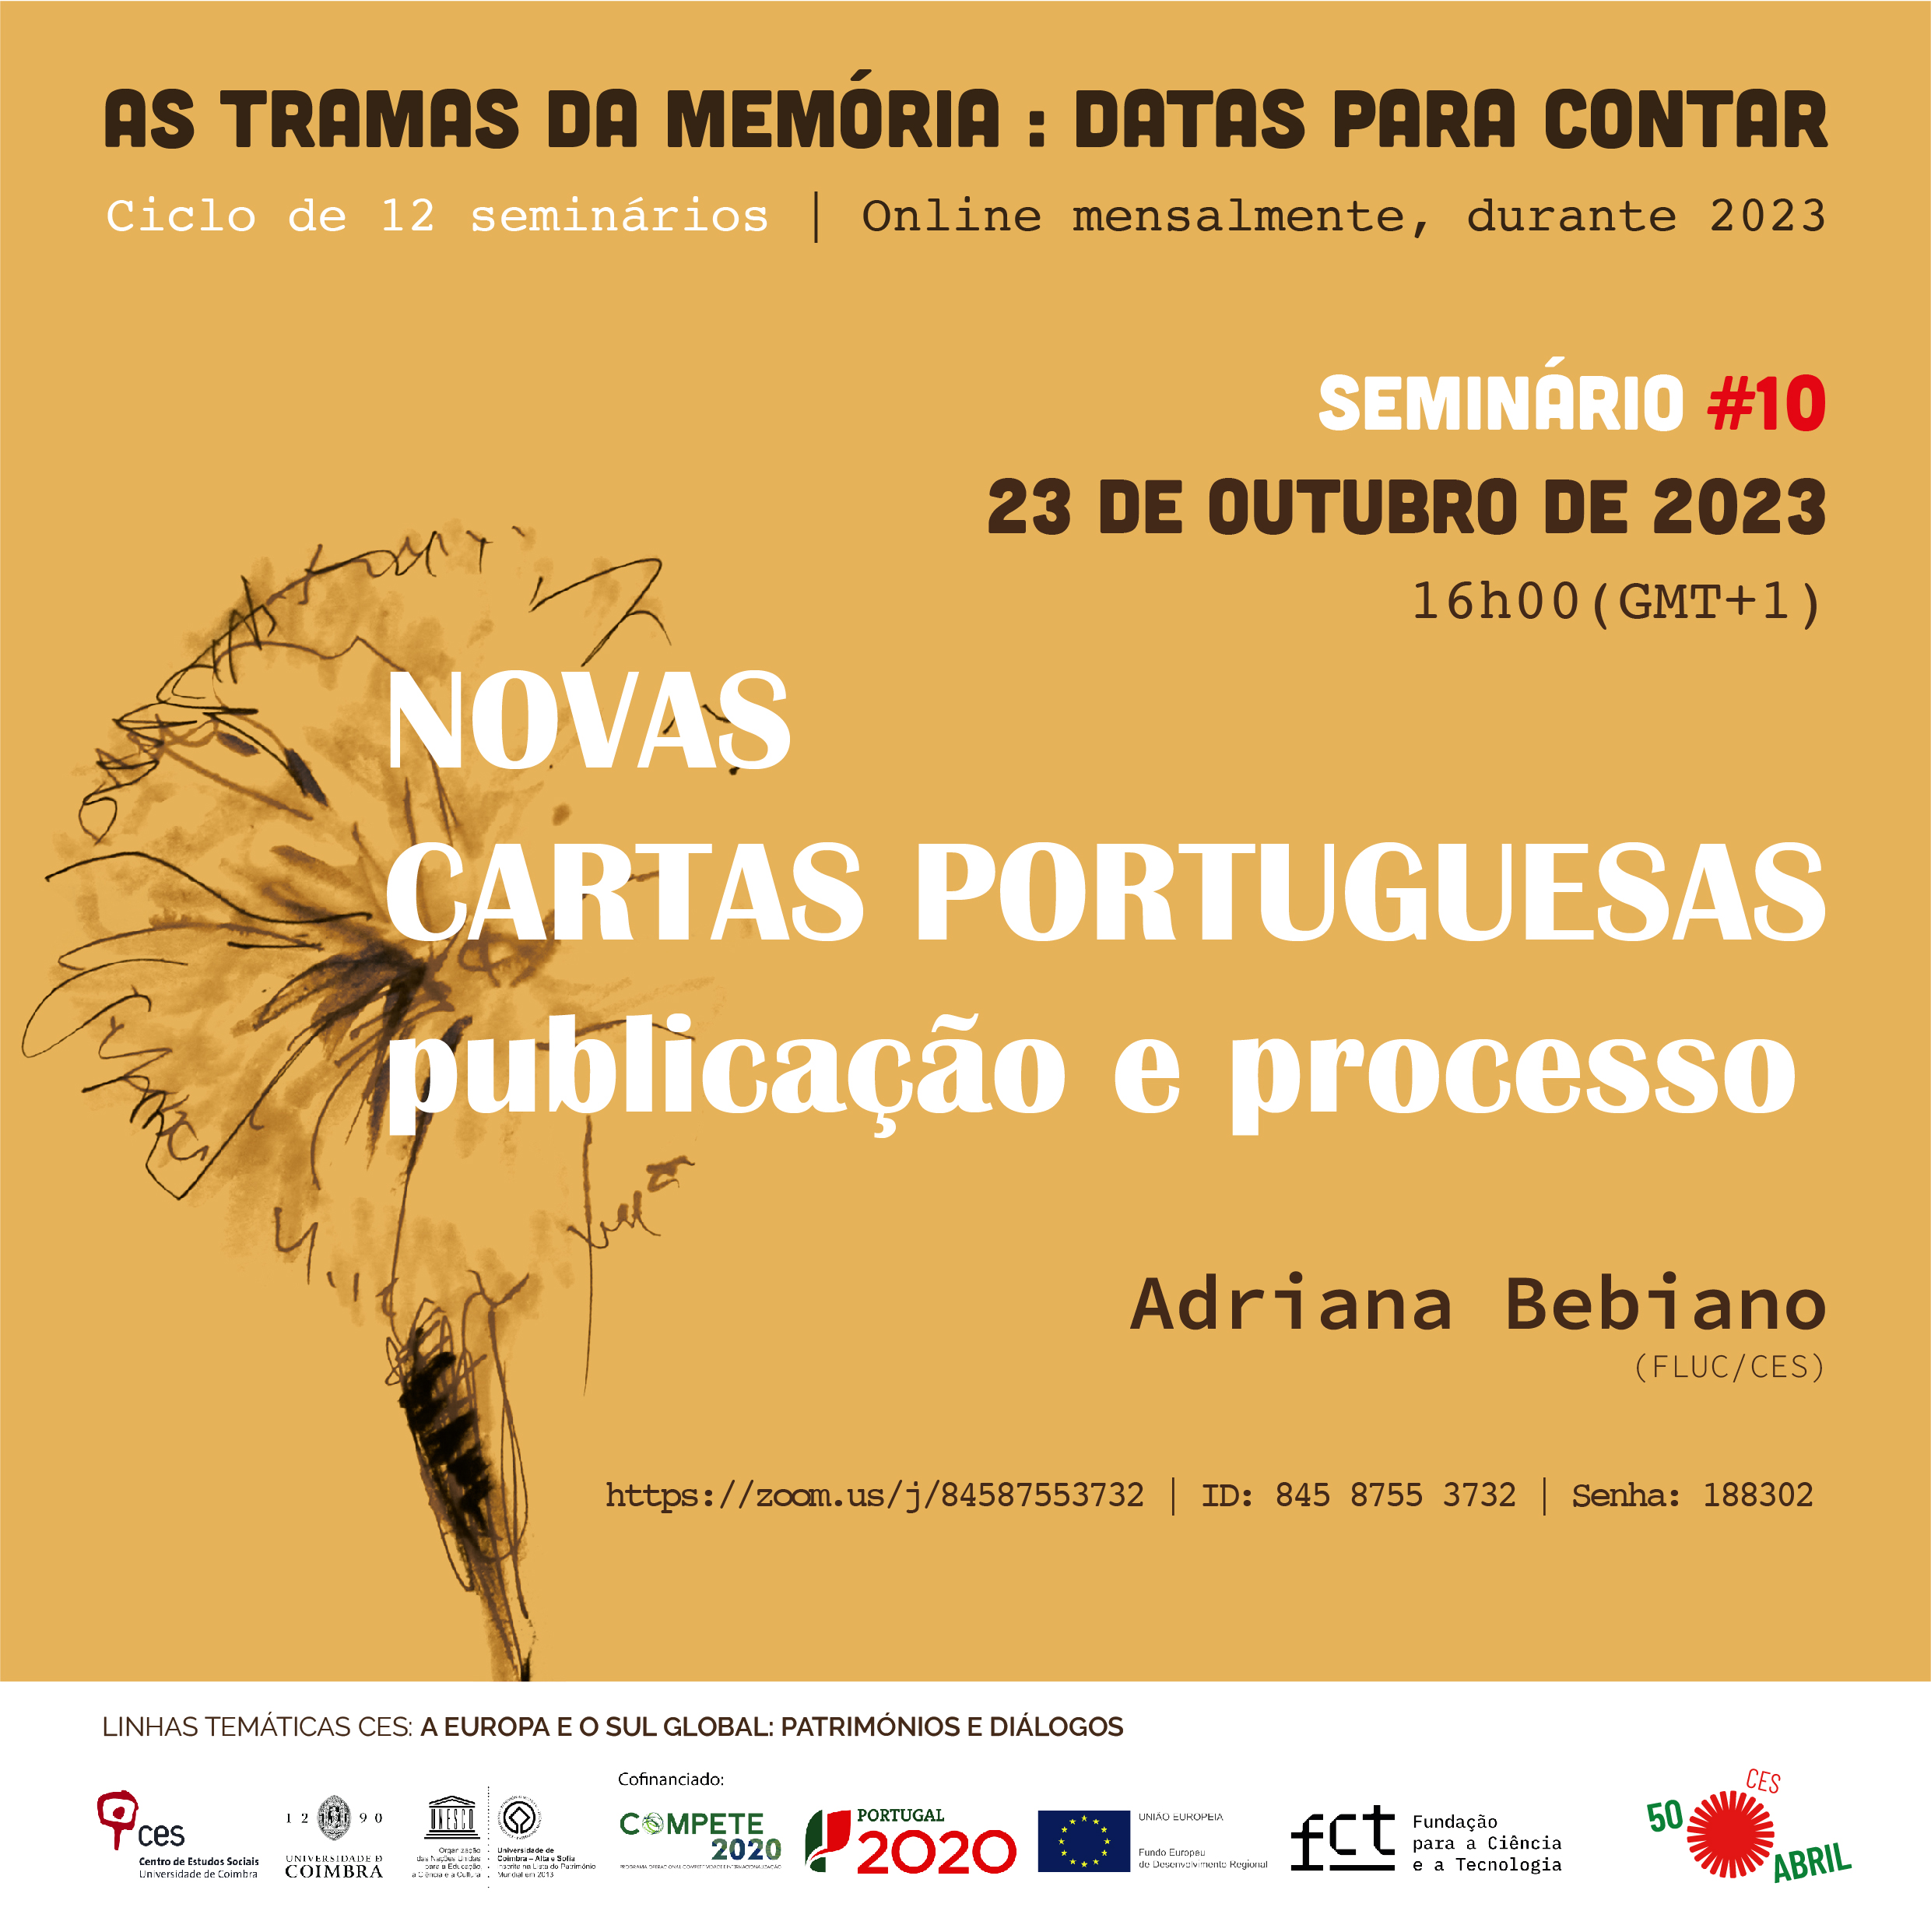 Novas Cartas Portuguesas - publicação e processo<span id="edit_41741"><script>$(function() { $('#edit_41741').load( "/myces/user/editobj.php?tipo=evento&id=41741" ); });</script></span>